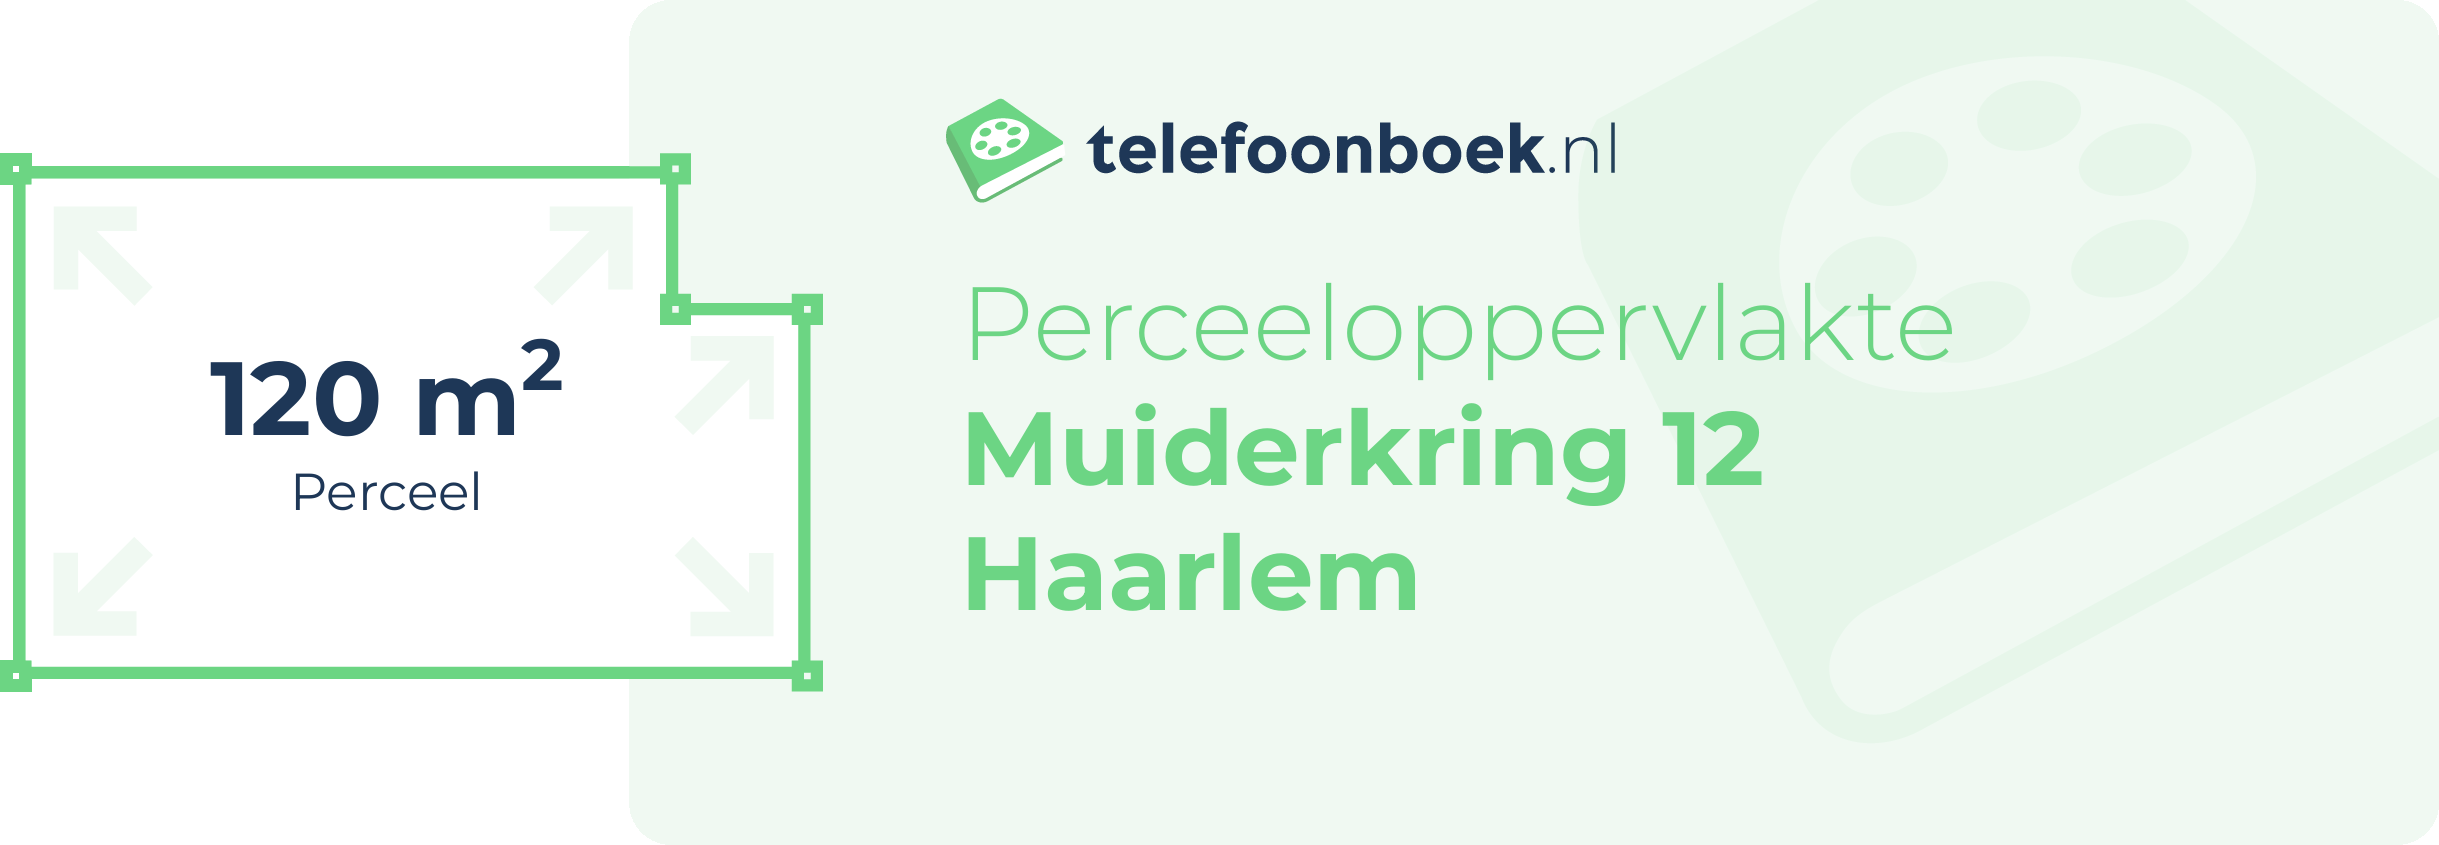 Perceeloppervlakte Muiderkring 12 Haarlem